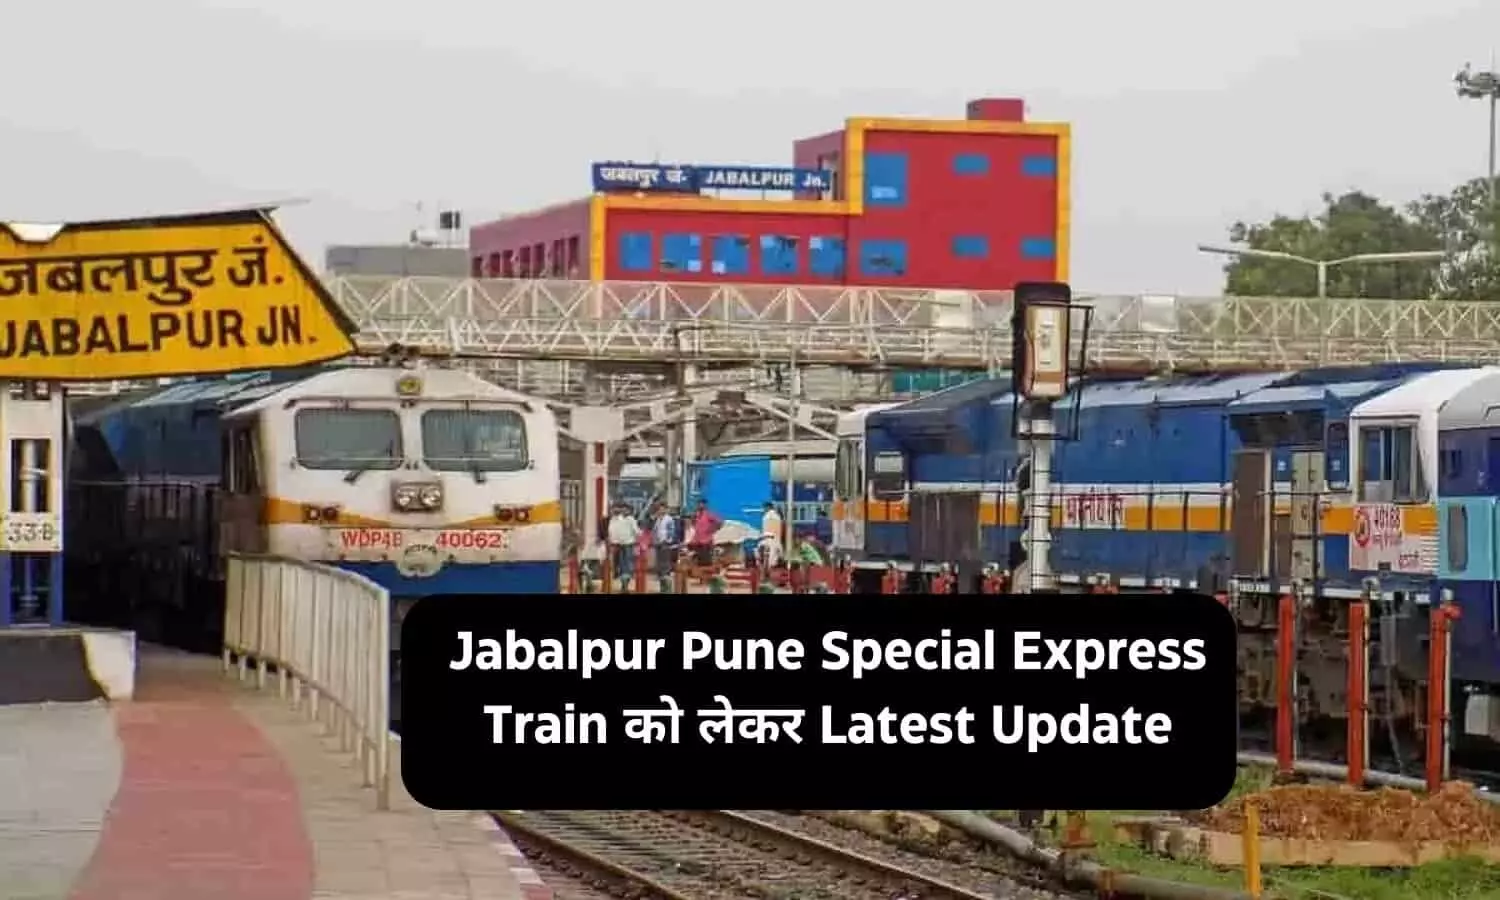 Jabalpur Pune Special Express Train को लेकर Latest Update, हजारों यात्रियों को मिलेगा लाभ